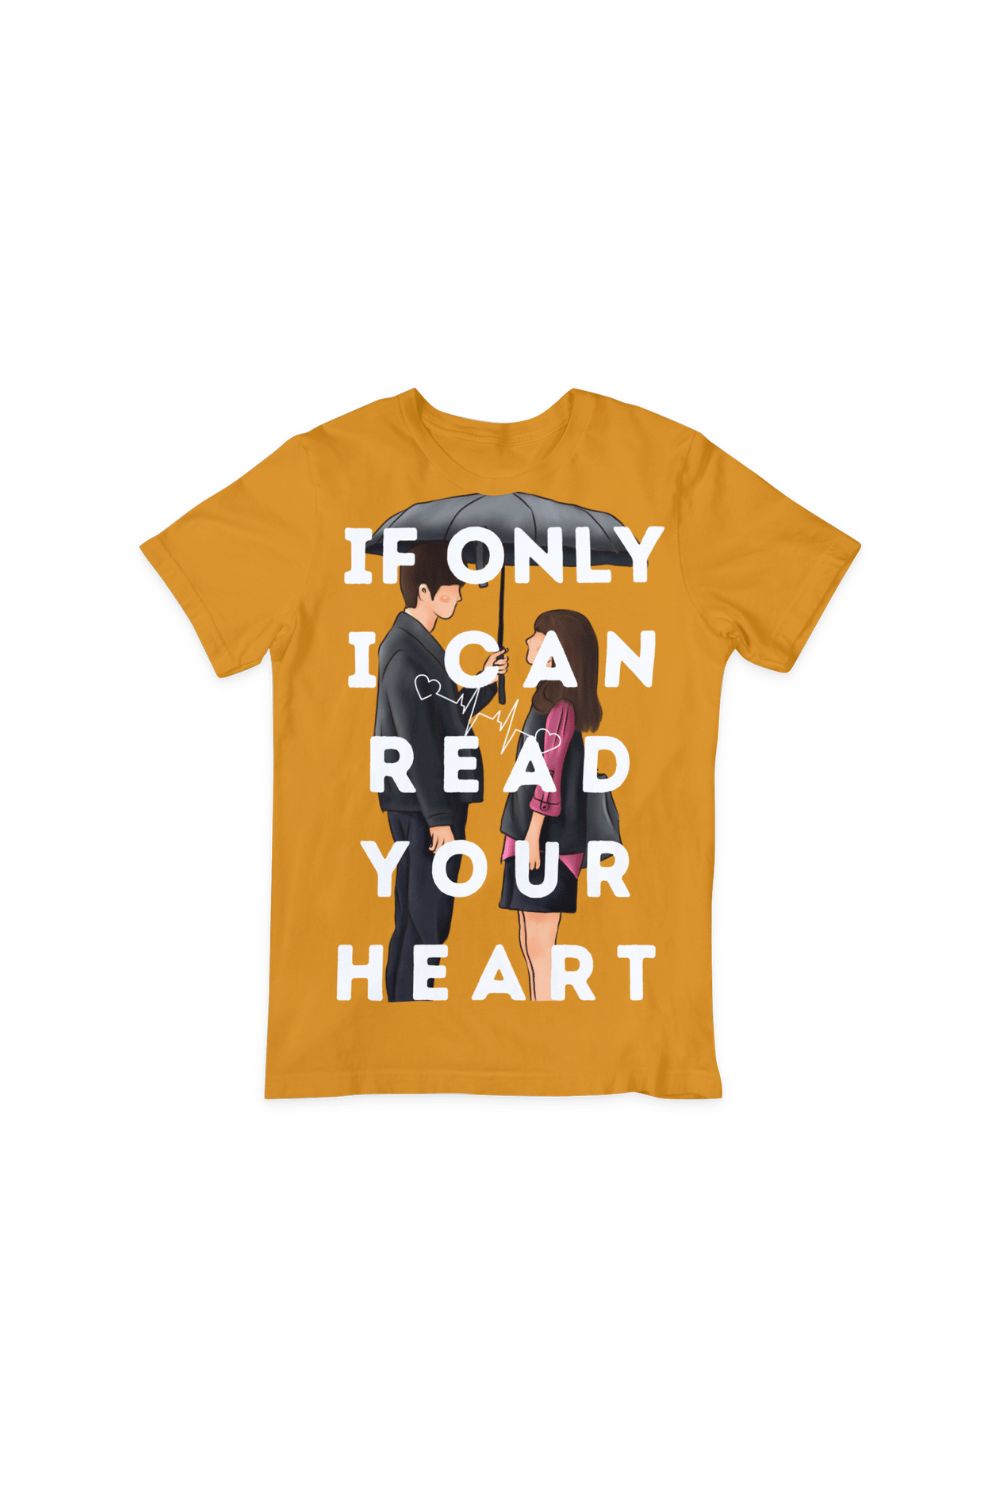 I love you T-shirt Design Bundles | Love T-shirt Design Bundles pinterest preview image.